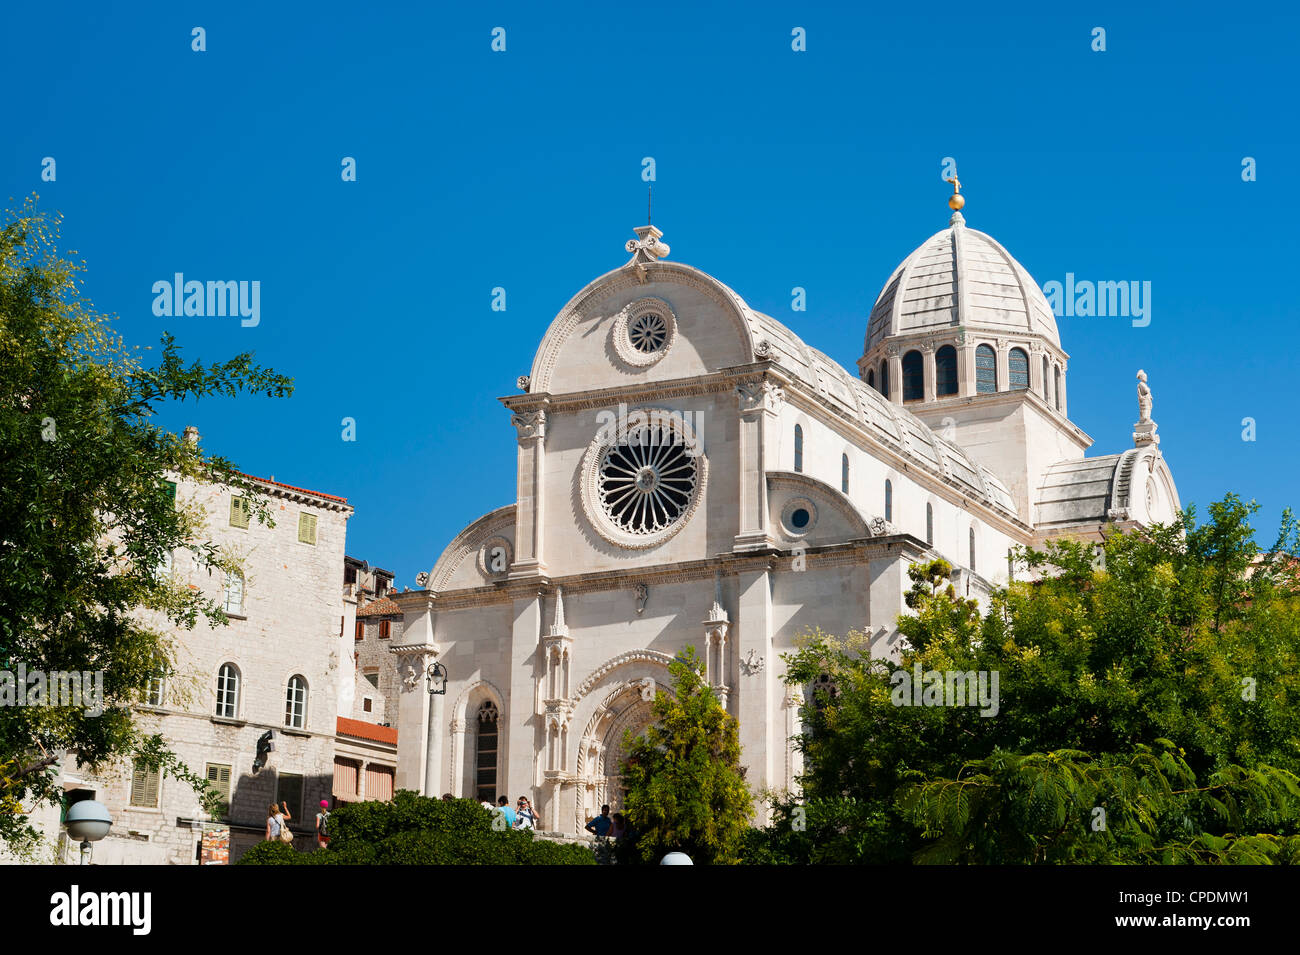 Katedrala Sv. Jakova (St. James Cathedral), UNESCO World Heritage Site, Sibenik, Dalmatia region, Croatia, Europe Stock Photo